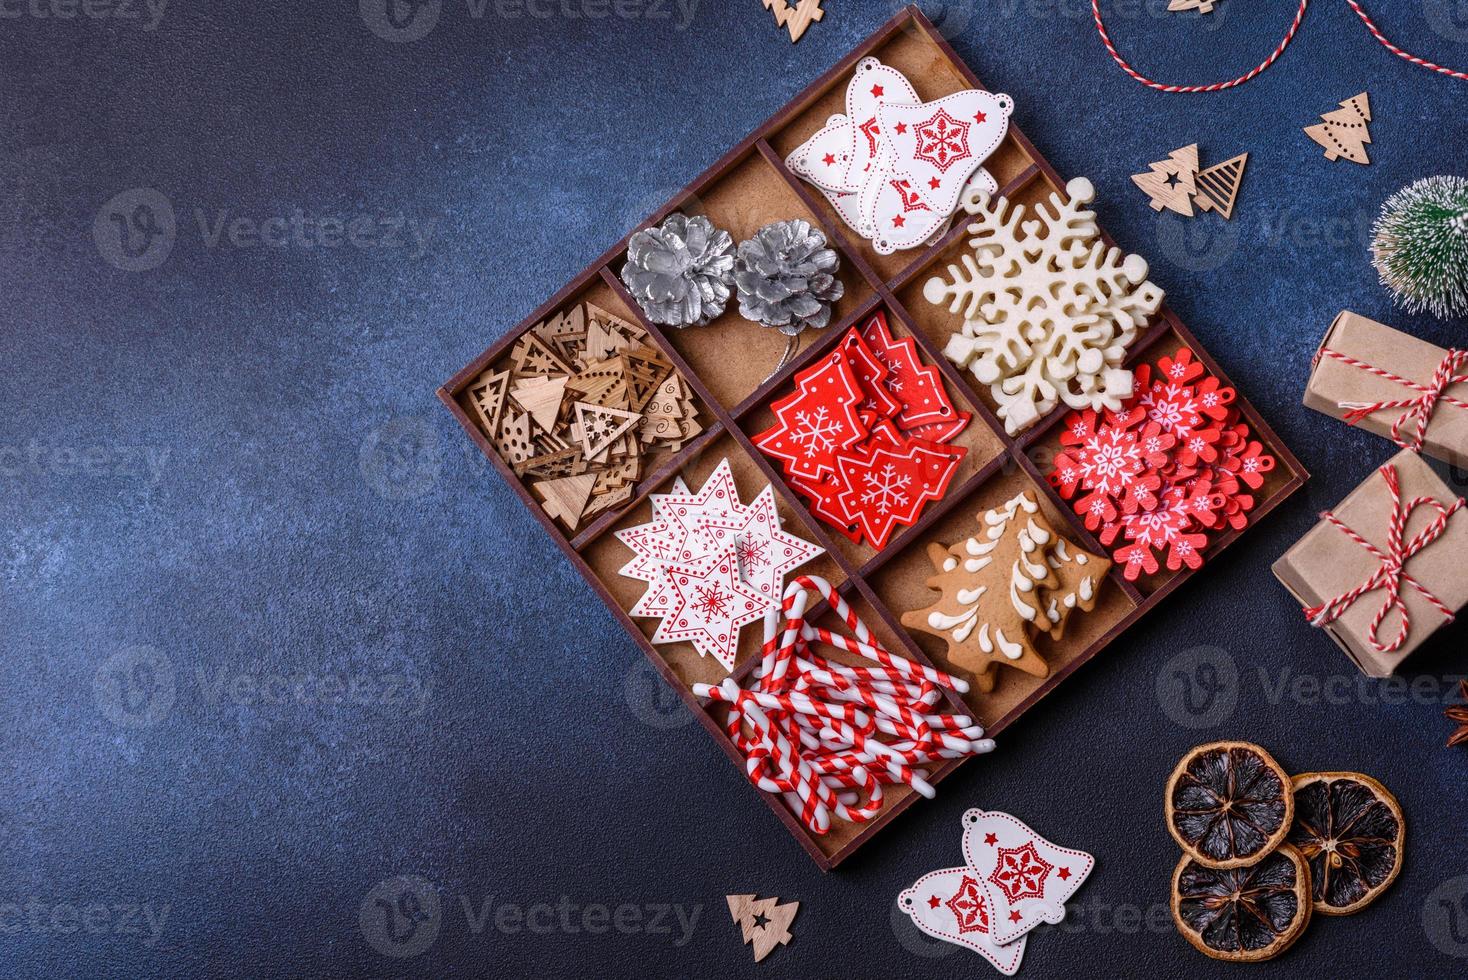 Kerstmis samenstelling met peperkoek koekjes, Kerstmis speelgoed, pijnboom kegels en specerijen foto